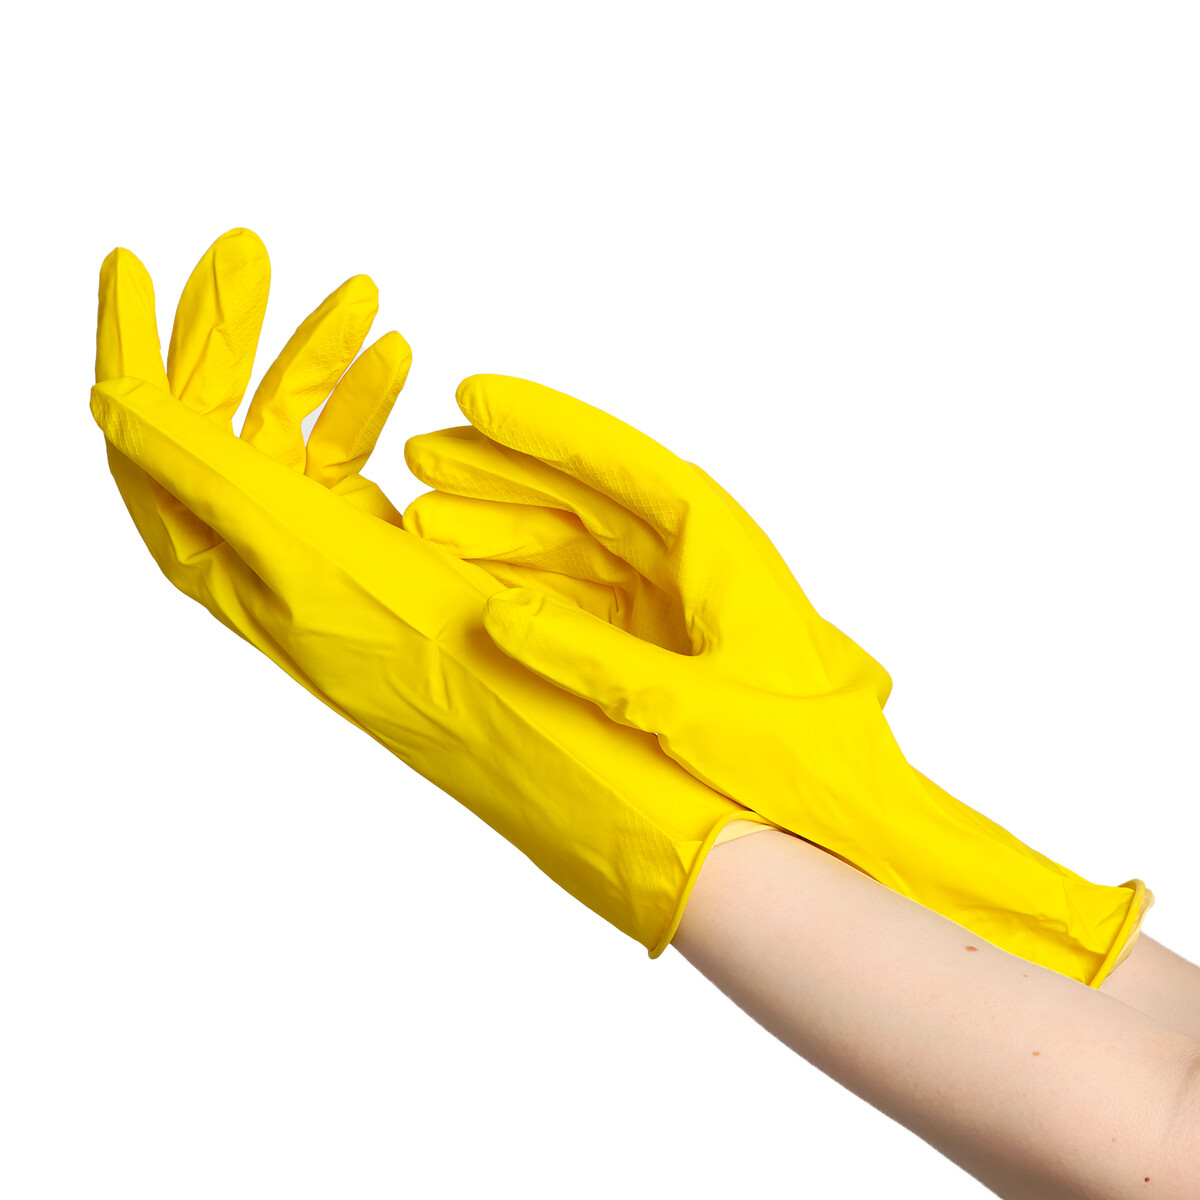 Перчатки латексные хозяйственны размер m, 30 гр, цвет желтый перчатки хозяйственные латексные доляна размер m 30 г хб напыление желтый